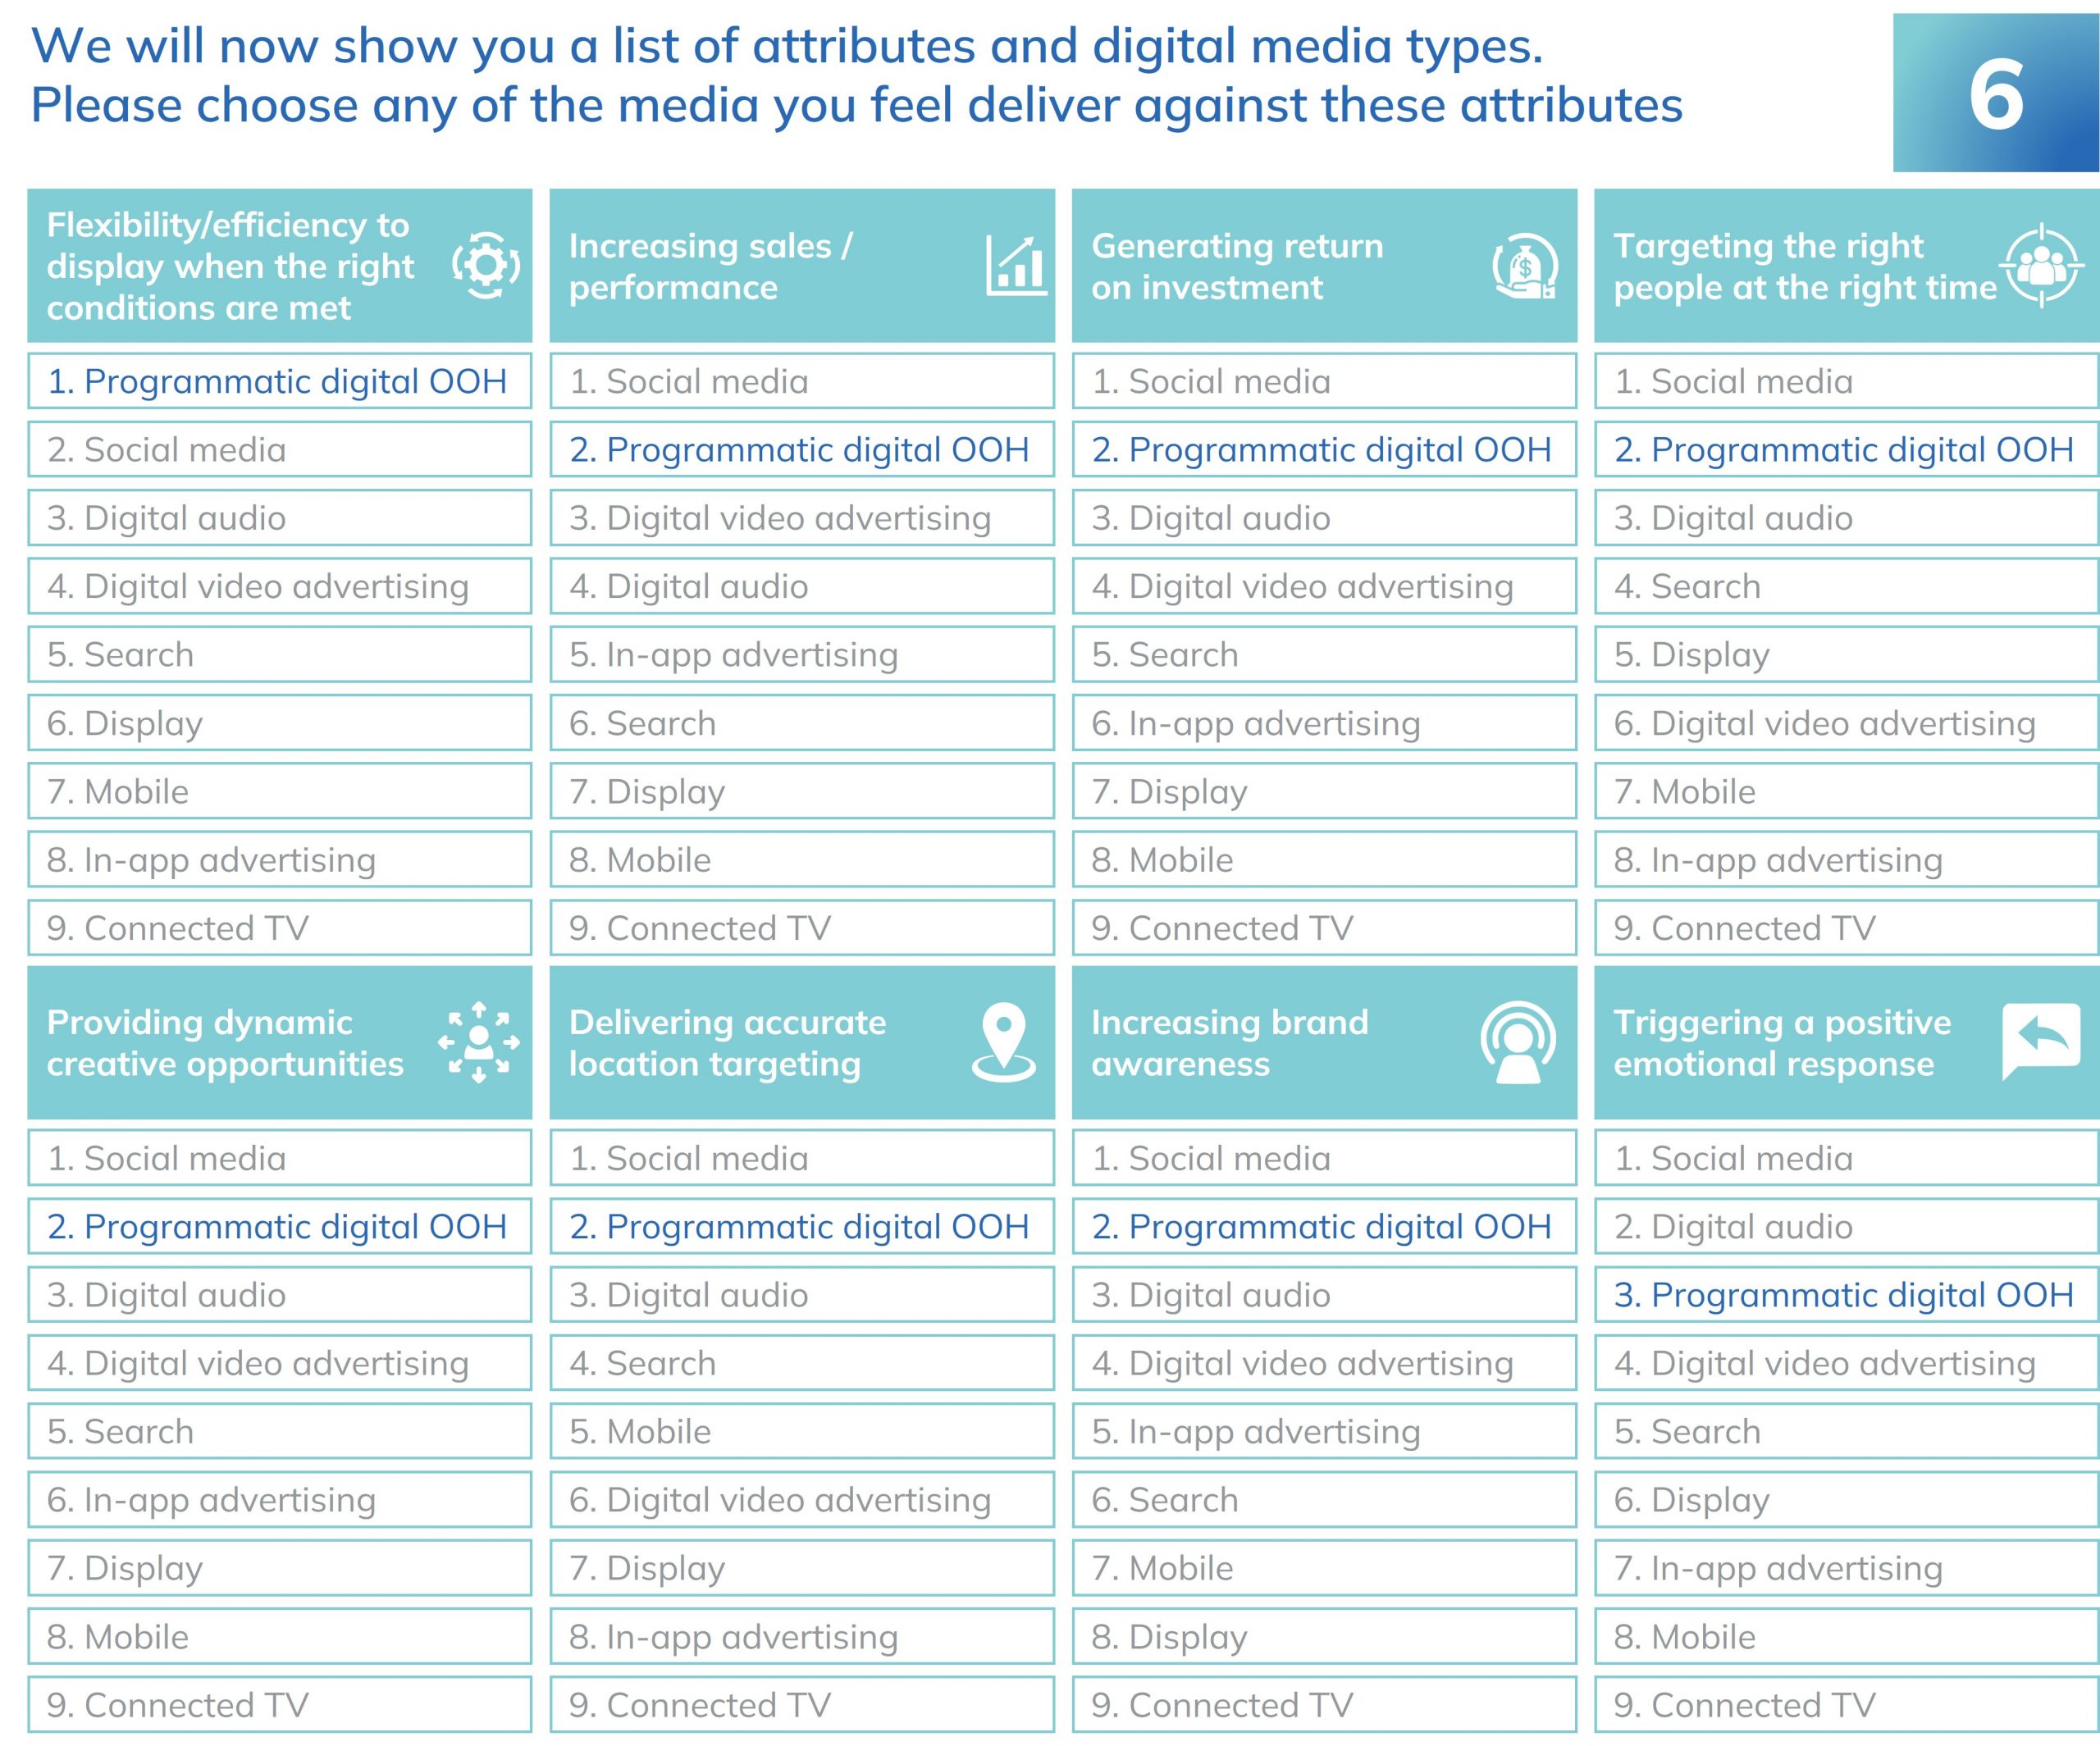 Attributes and digital media types